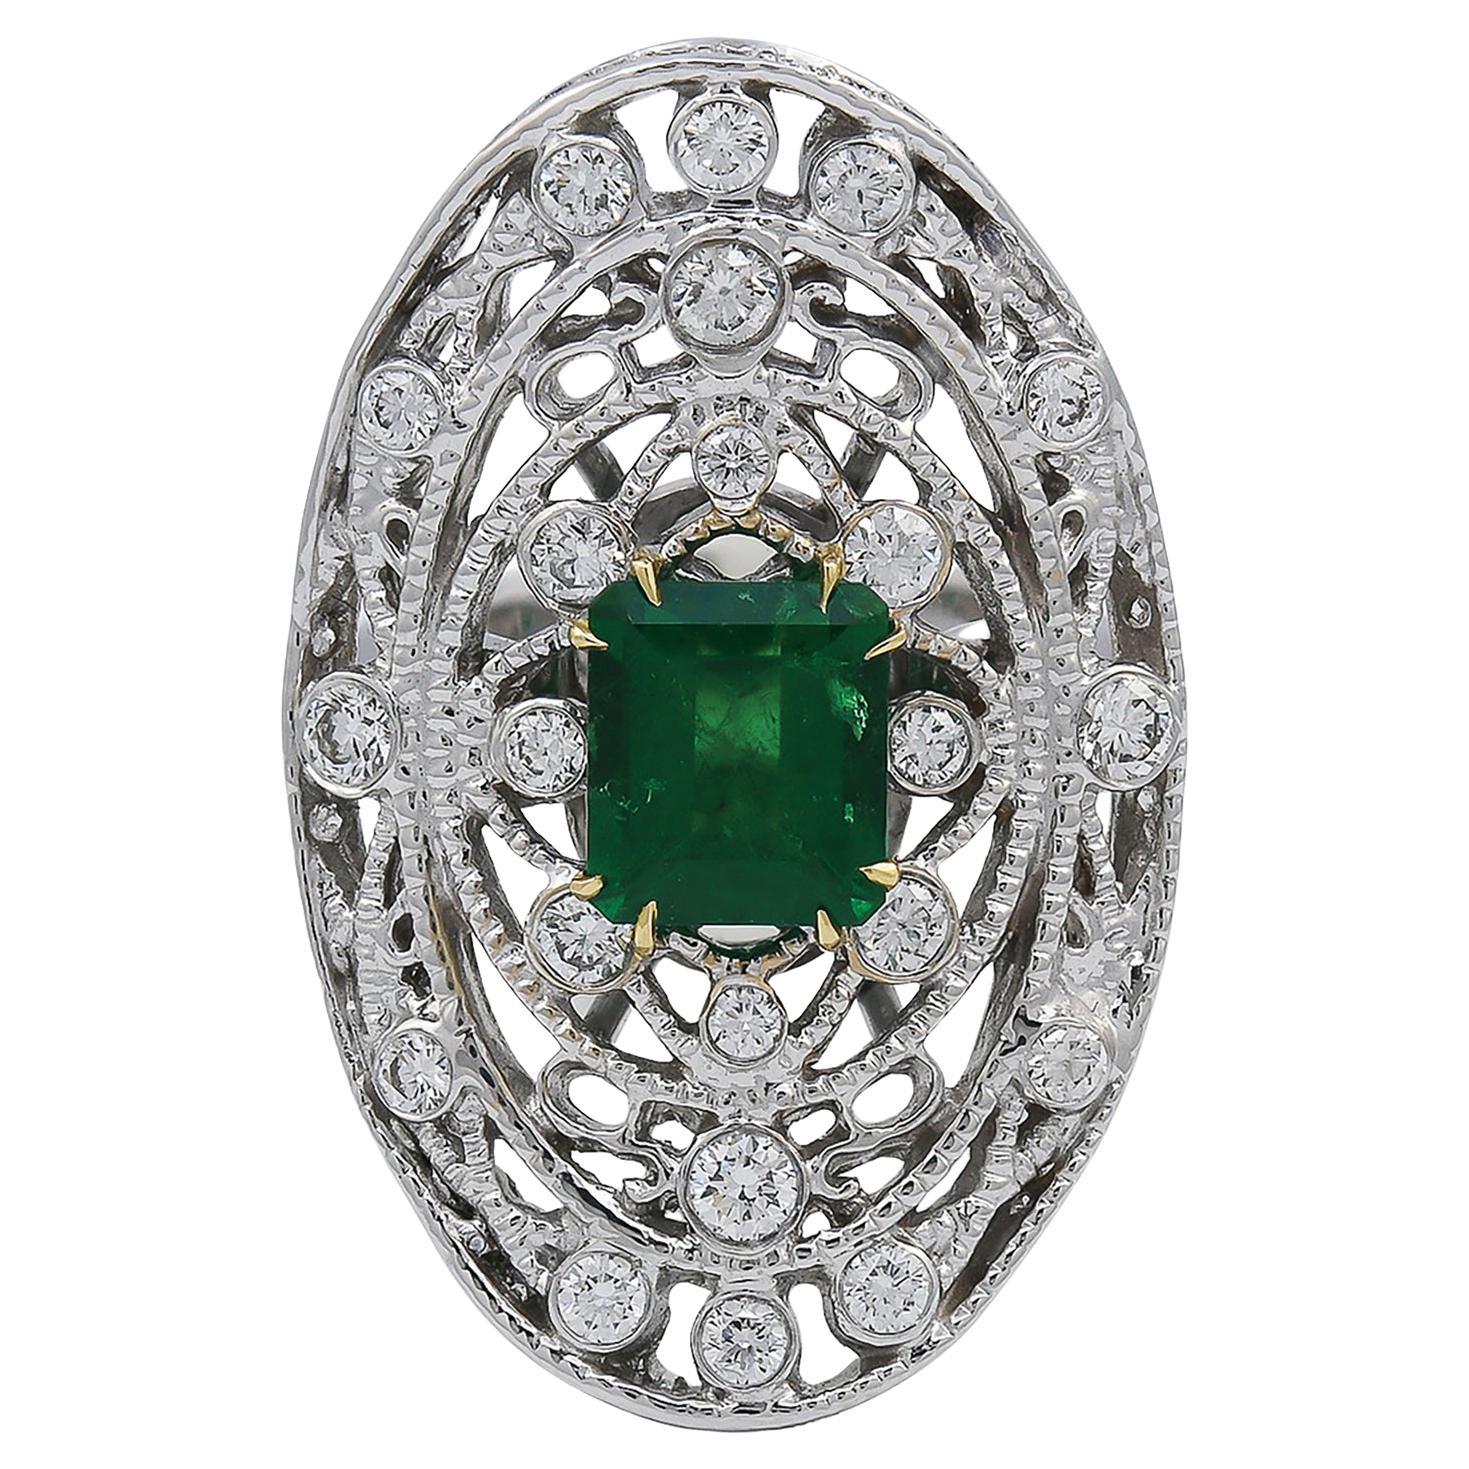 Spectra Fine Jewelry GRS Certified 2.18 Carat Colombian Emerald Diamond Ring